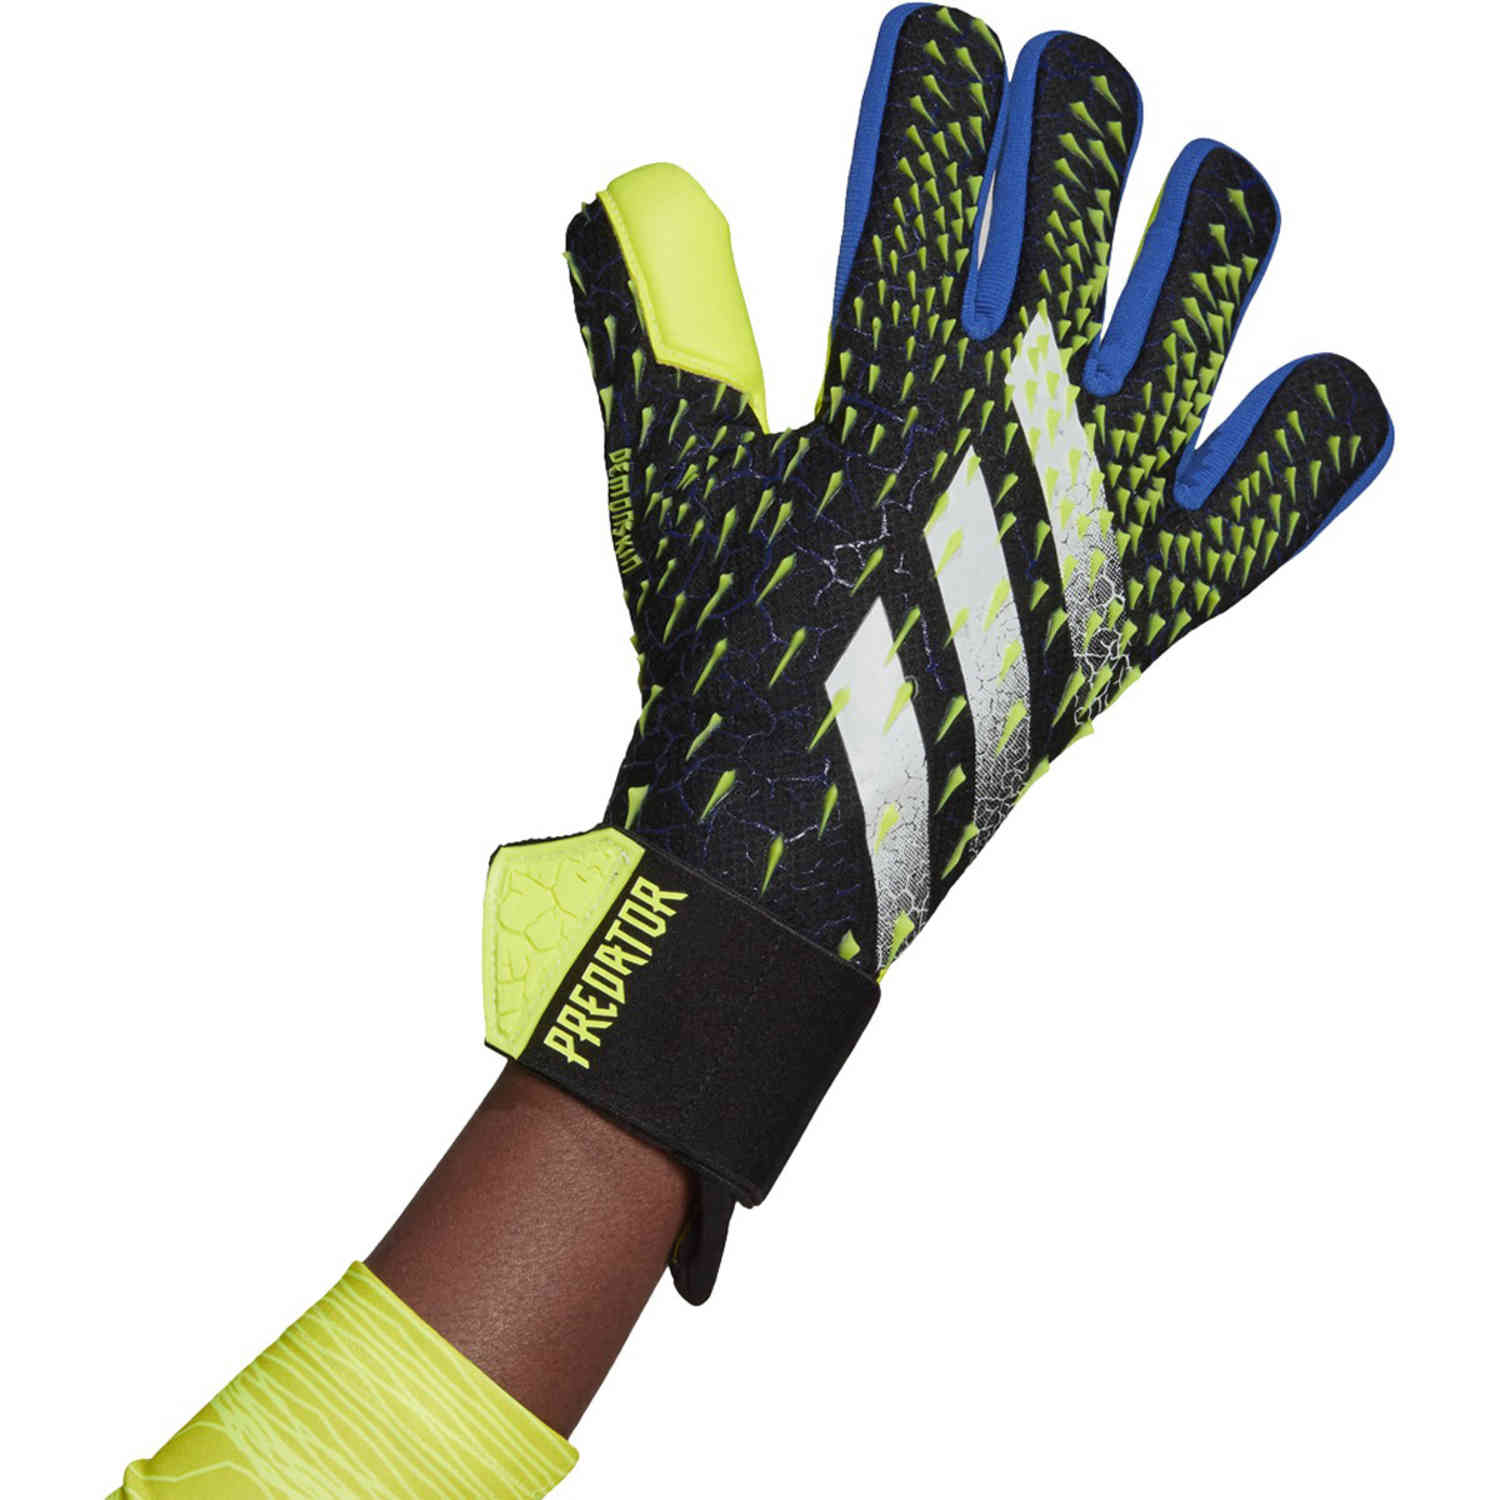 Puma Ultra 1 Negative Cut Goalkeeper Gloves - Green, Black & Blue